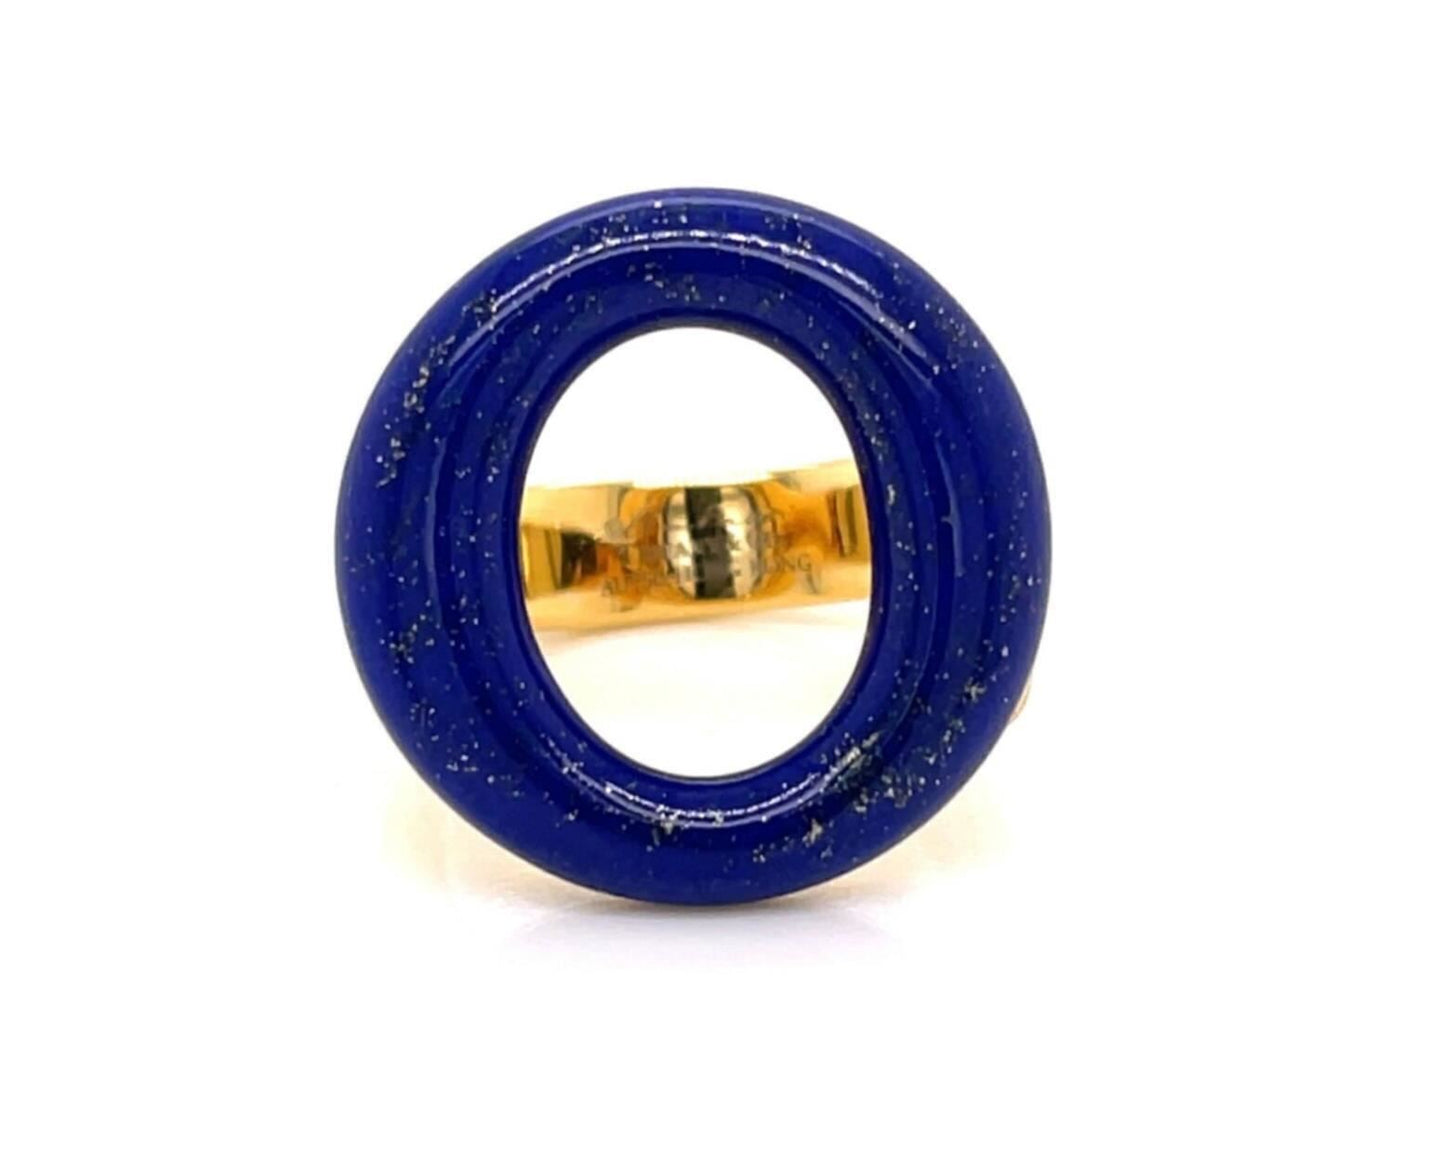 Tiffany & Co. Peretti Sevillana Lapis Lazuli 18k Yellow Gold Ring Size 7 | Rings | catalog, Designer Jewelry, Elsa Peretti, Rings, Sevillana, Tiffany & Co. | Tiffany & Co.